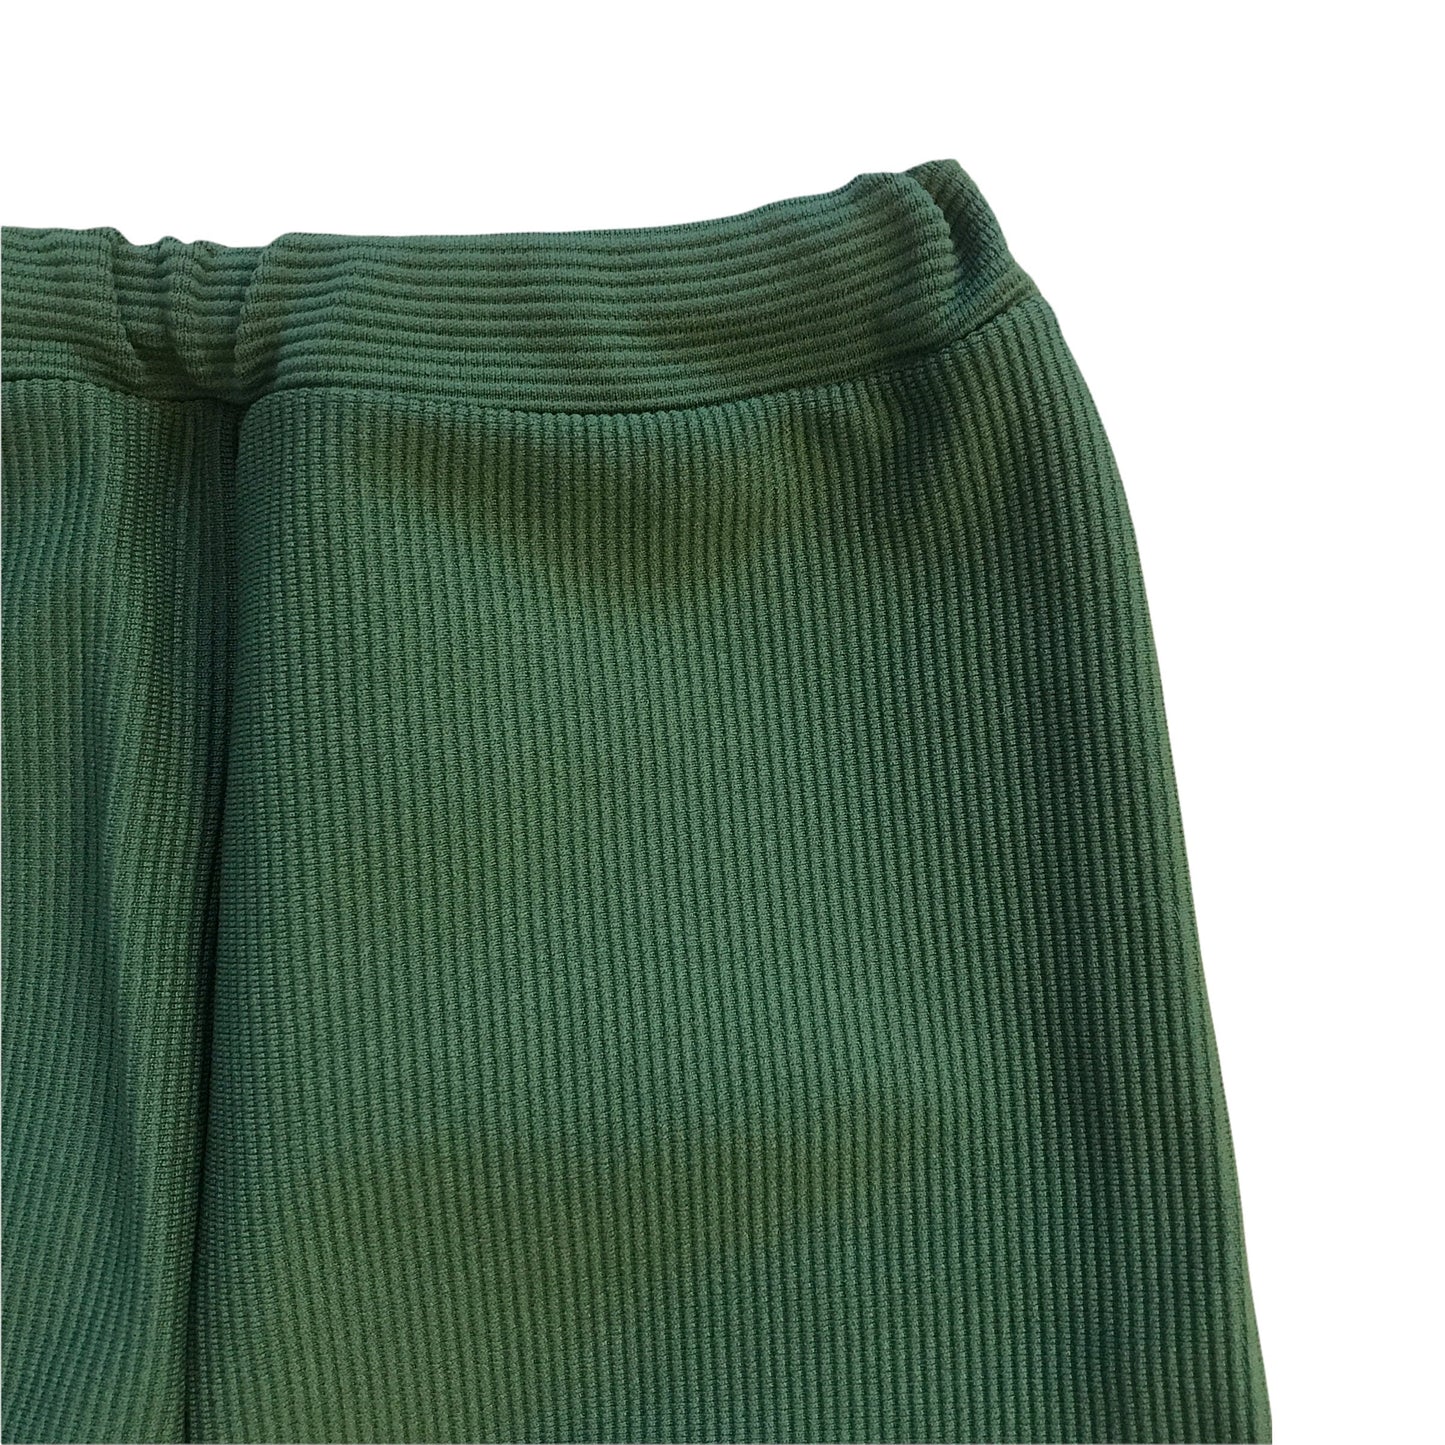 Vintage 1970s Green Nylon Stirrup Pants  6-8Y